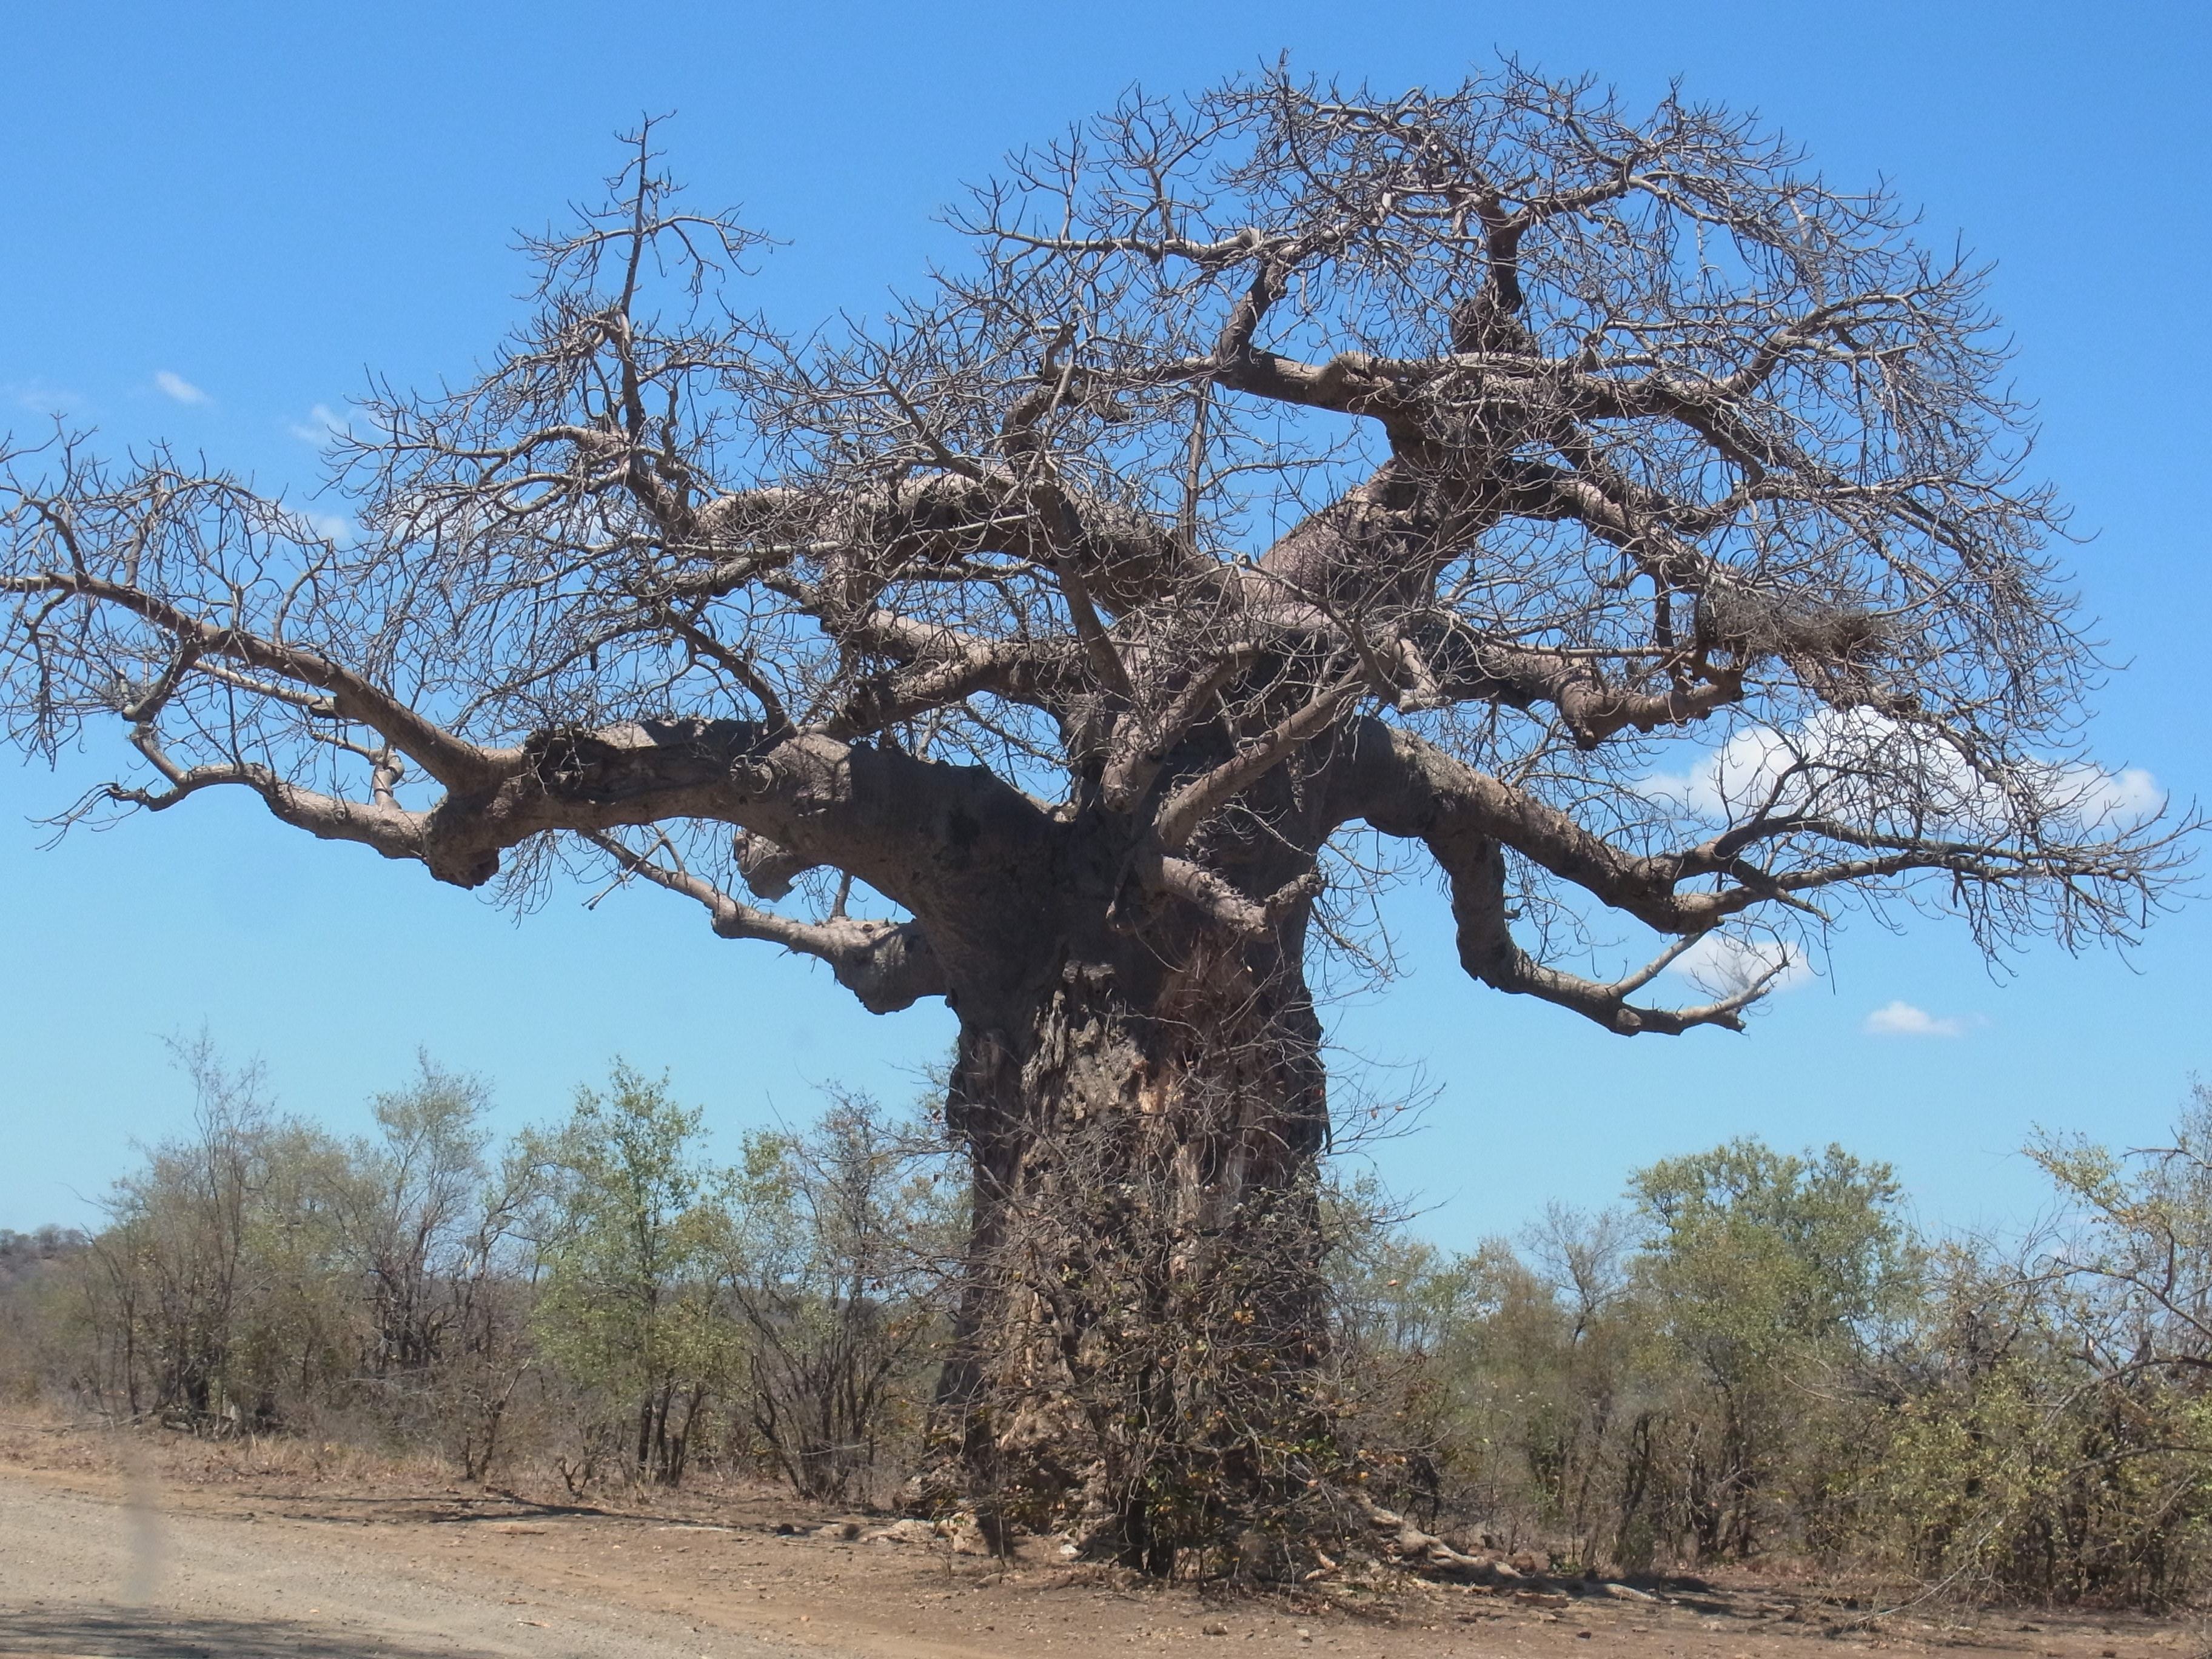 'De oudste baobabbomen gaan dood!' Ja, wat had je anders gedacht?